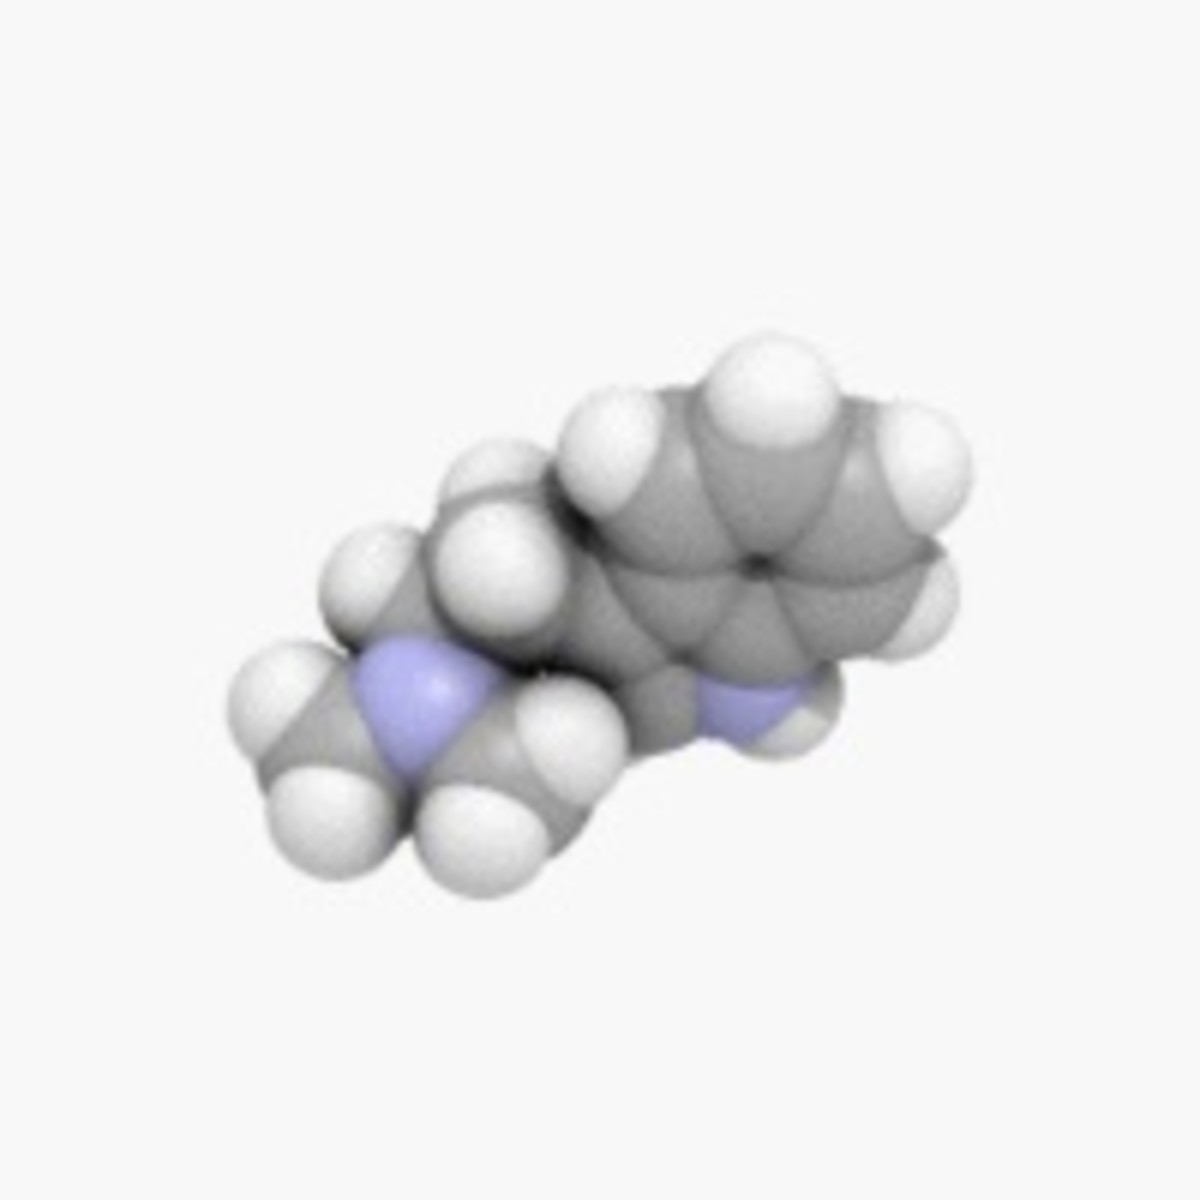 DMT - Dimethyltryptamine - The Spirit Molecule